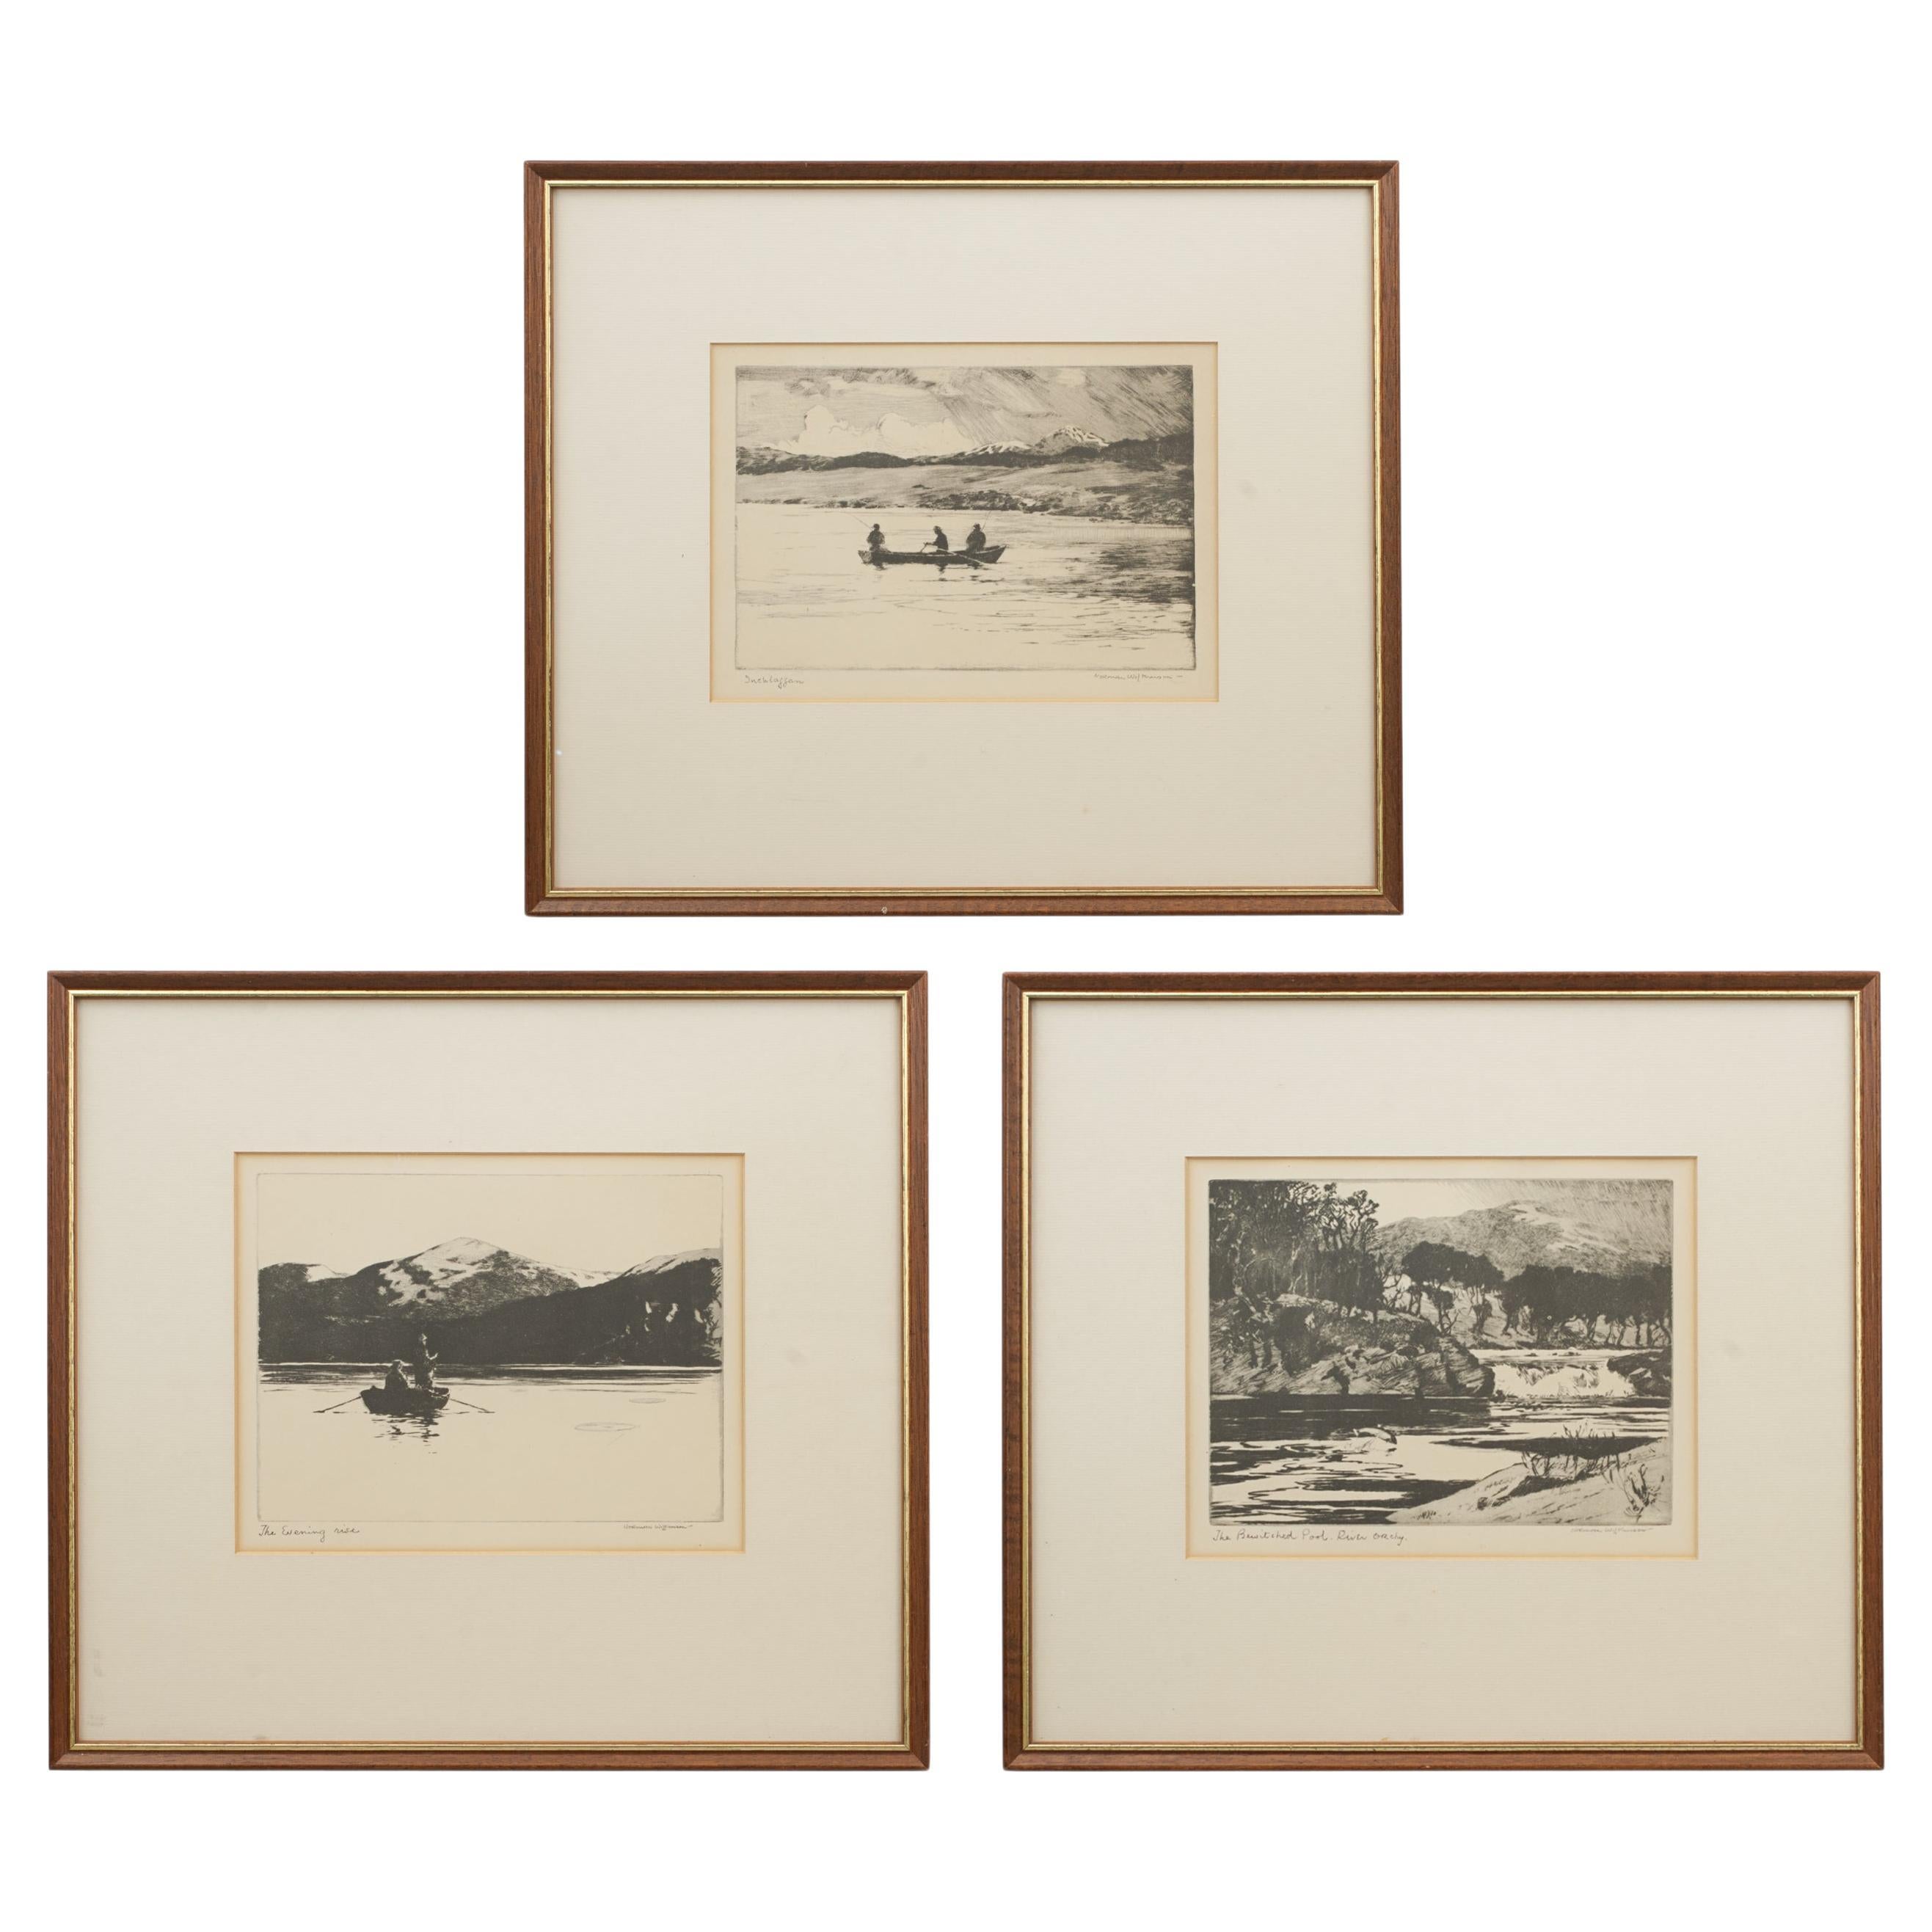 Three Fishing Prints by Wilkinson